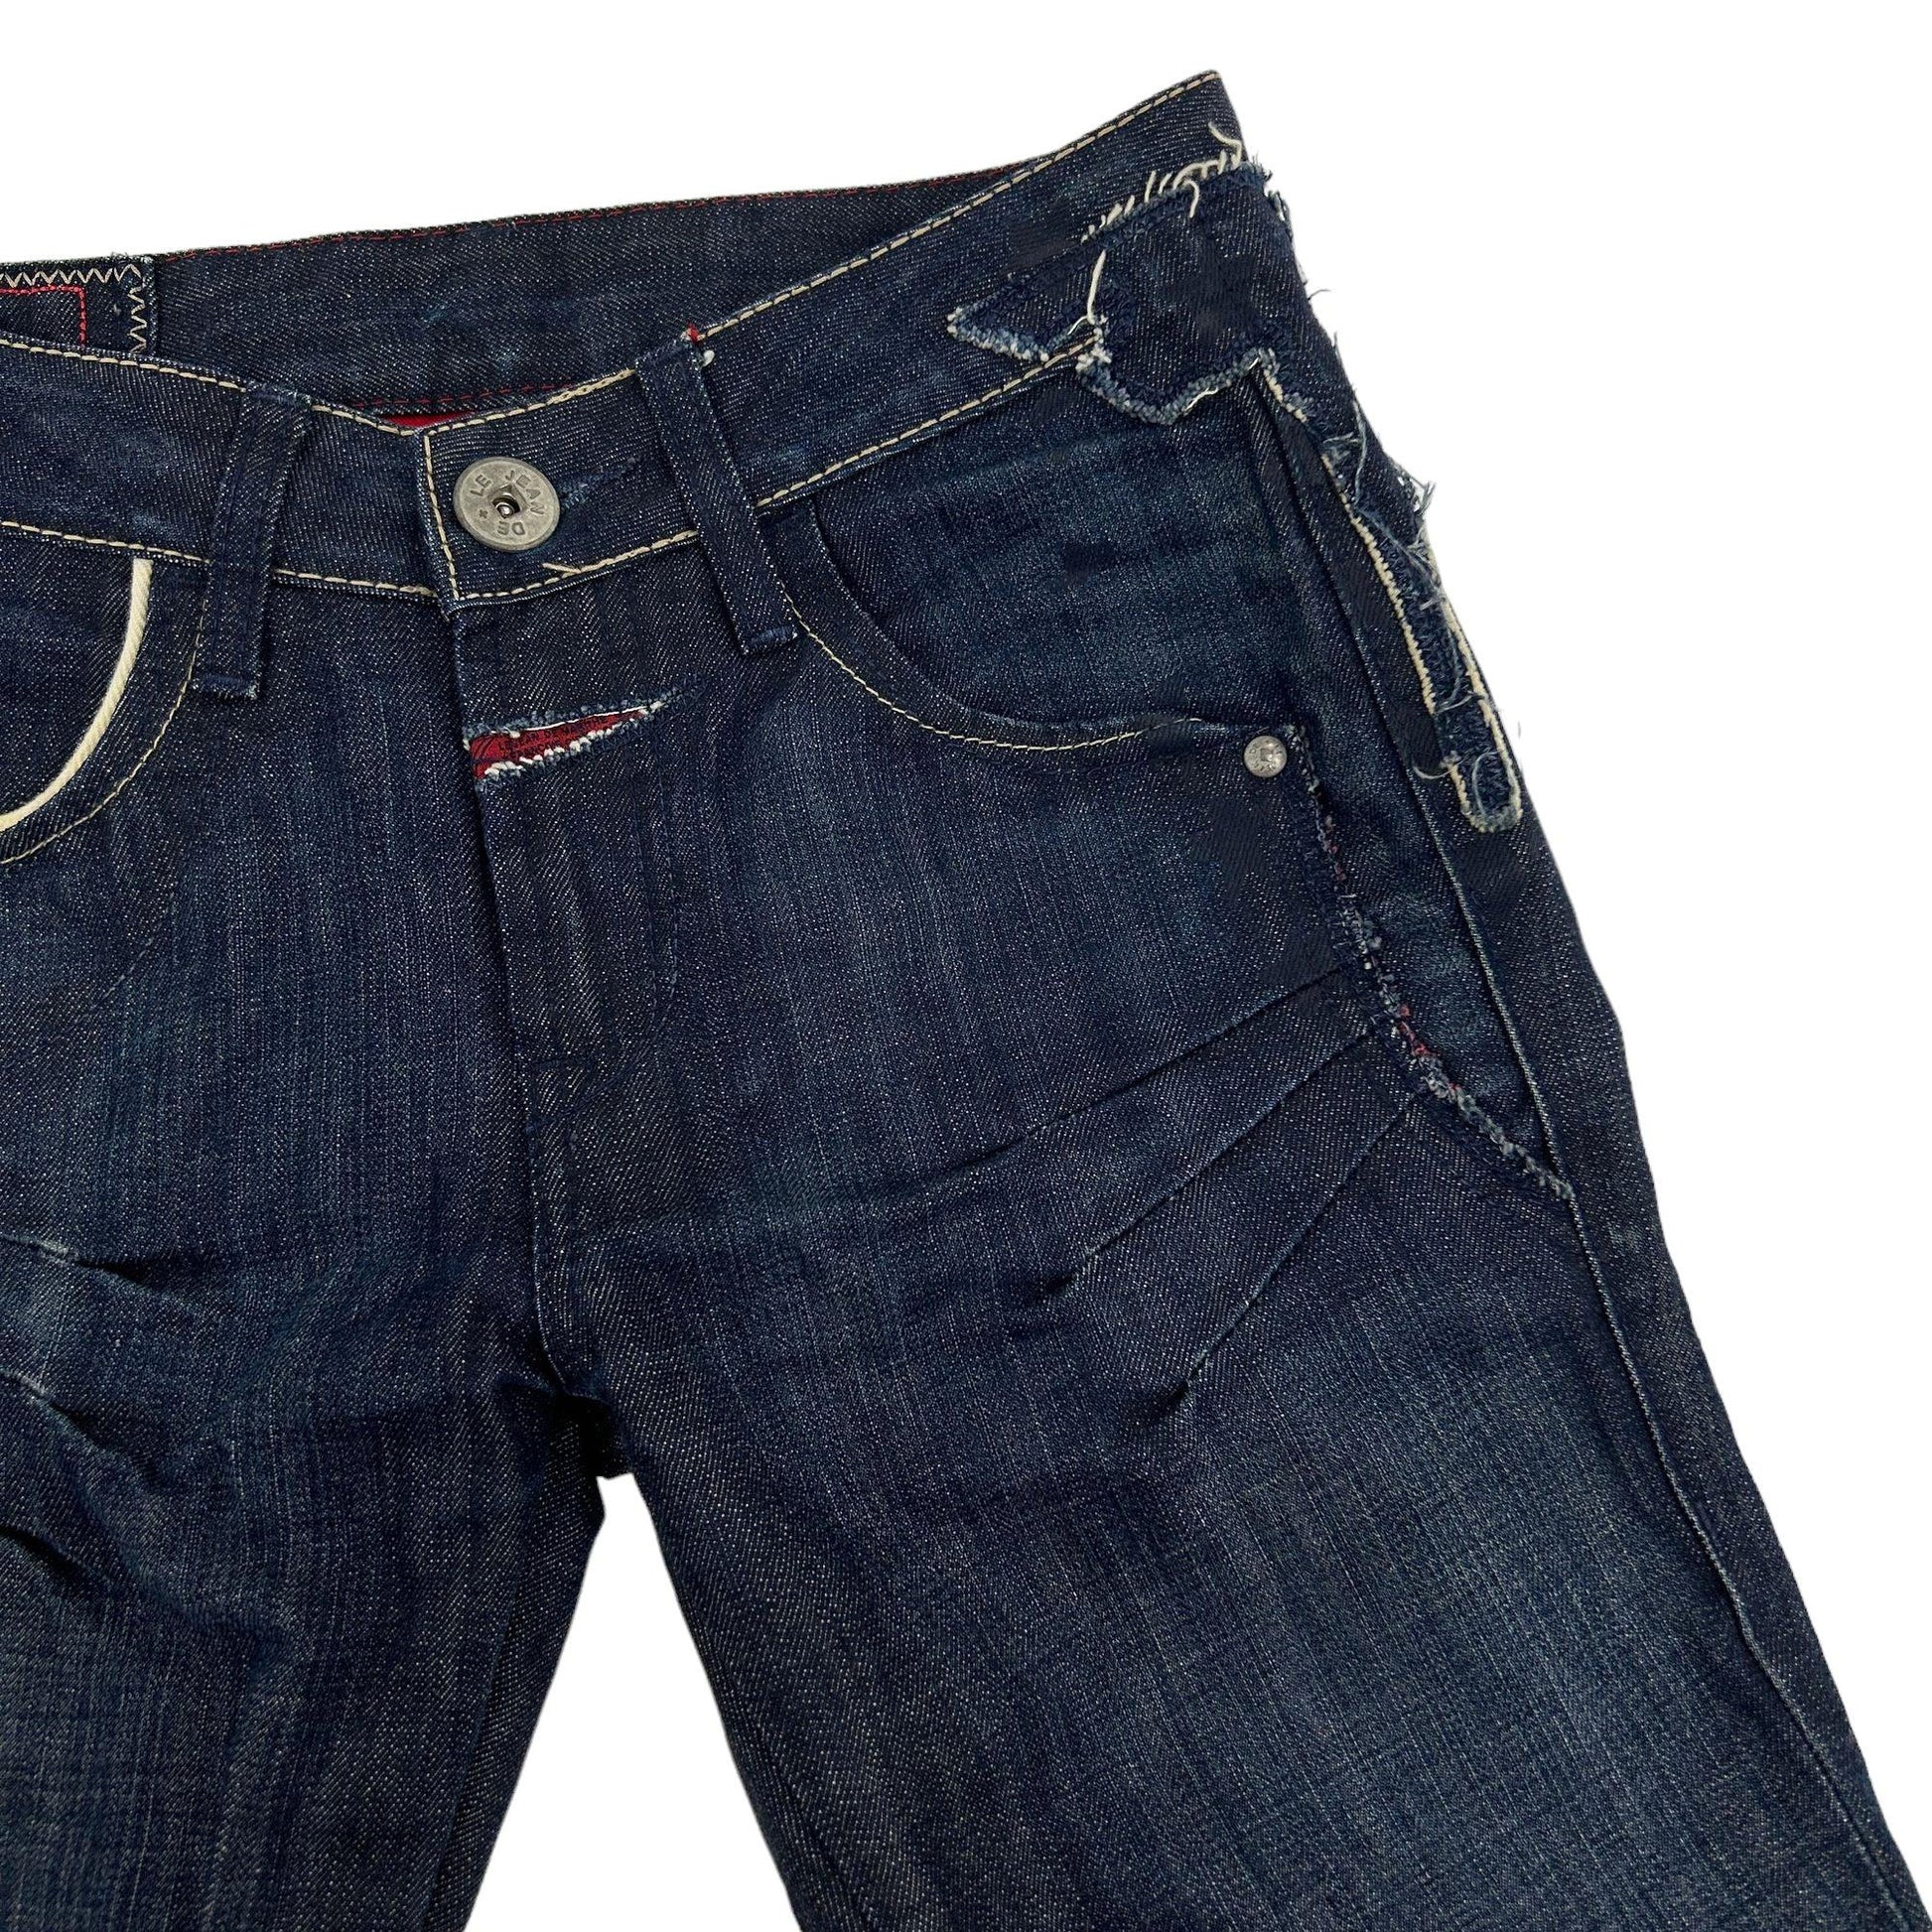 Vintage Marithe Francois Girbaud Stripe Denim Jeans Size W28 - Known Source